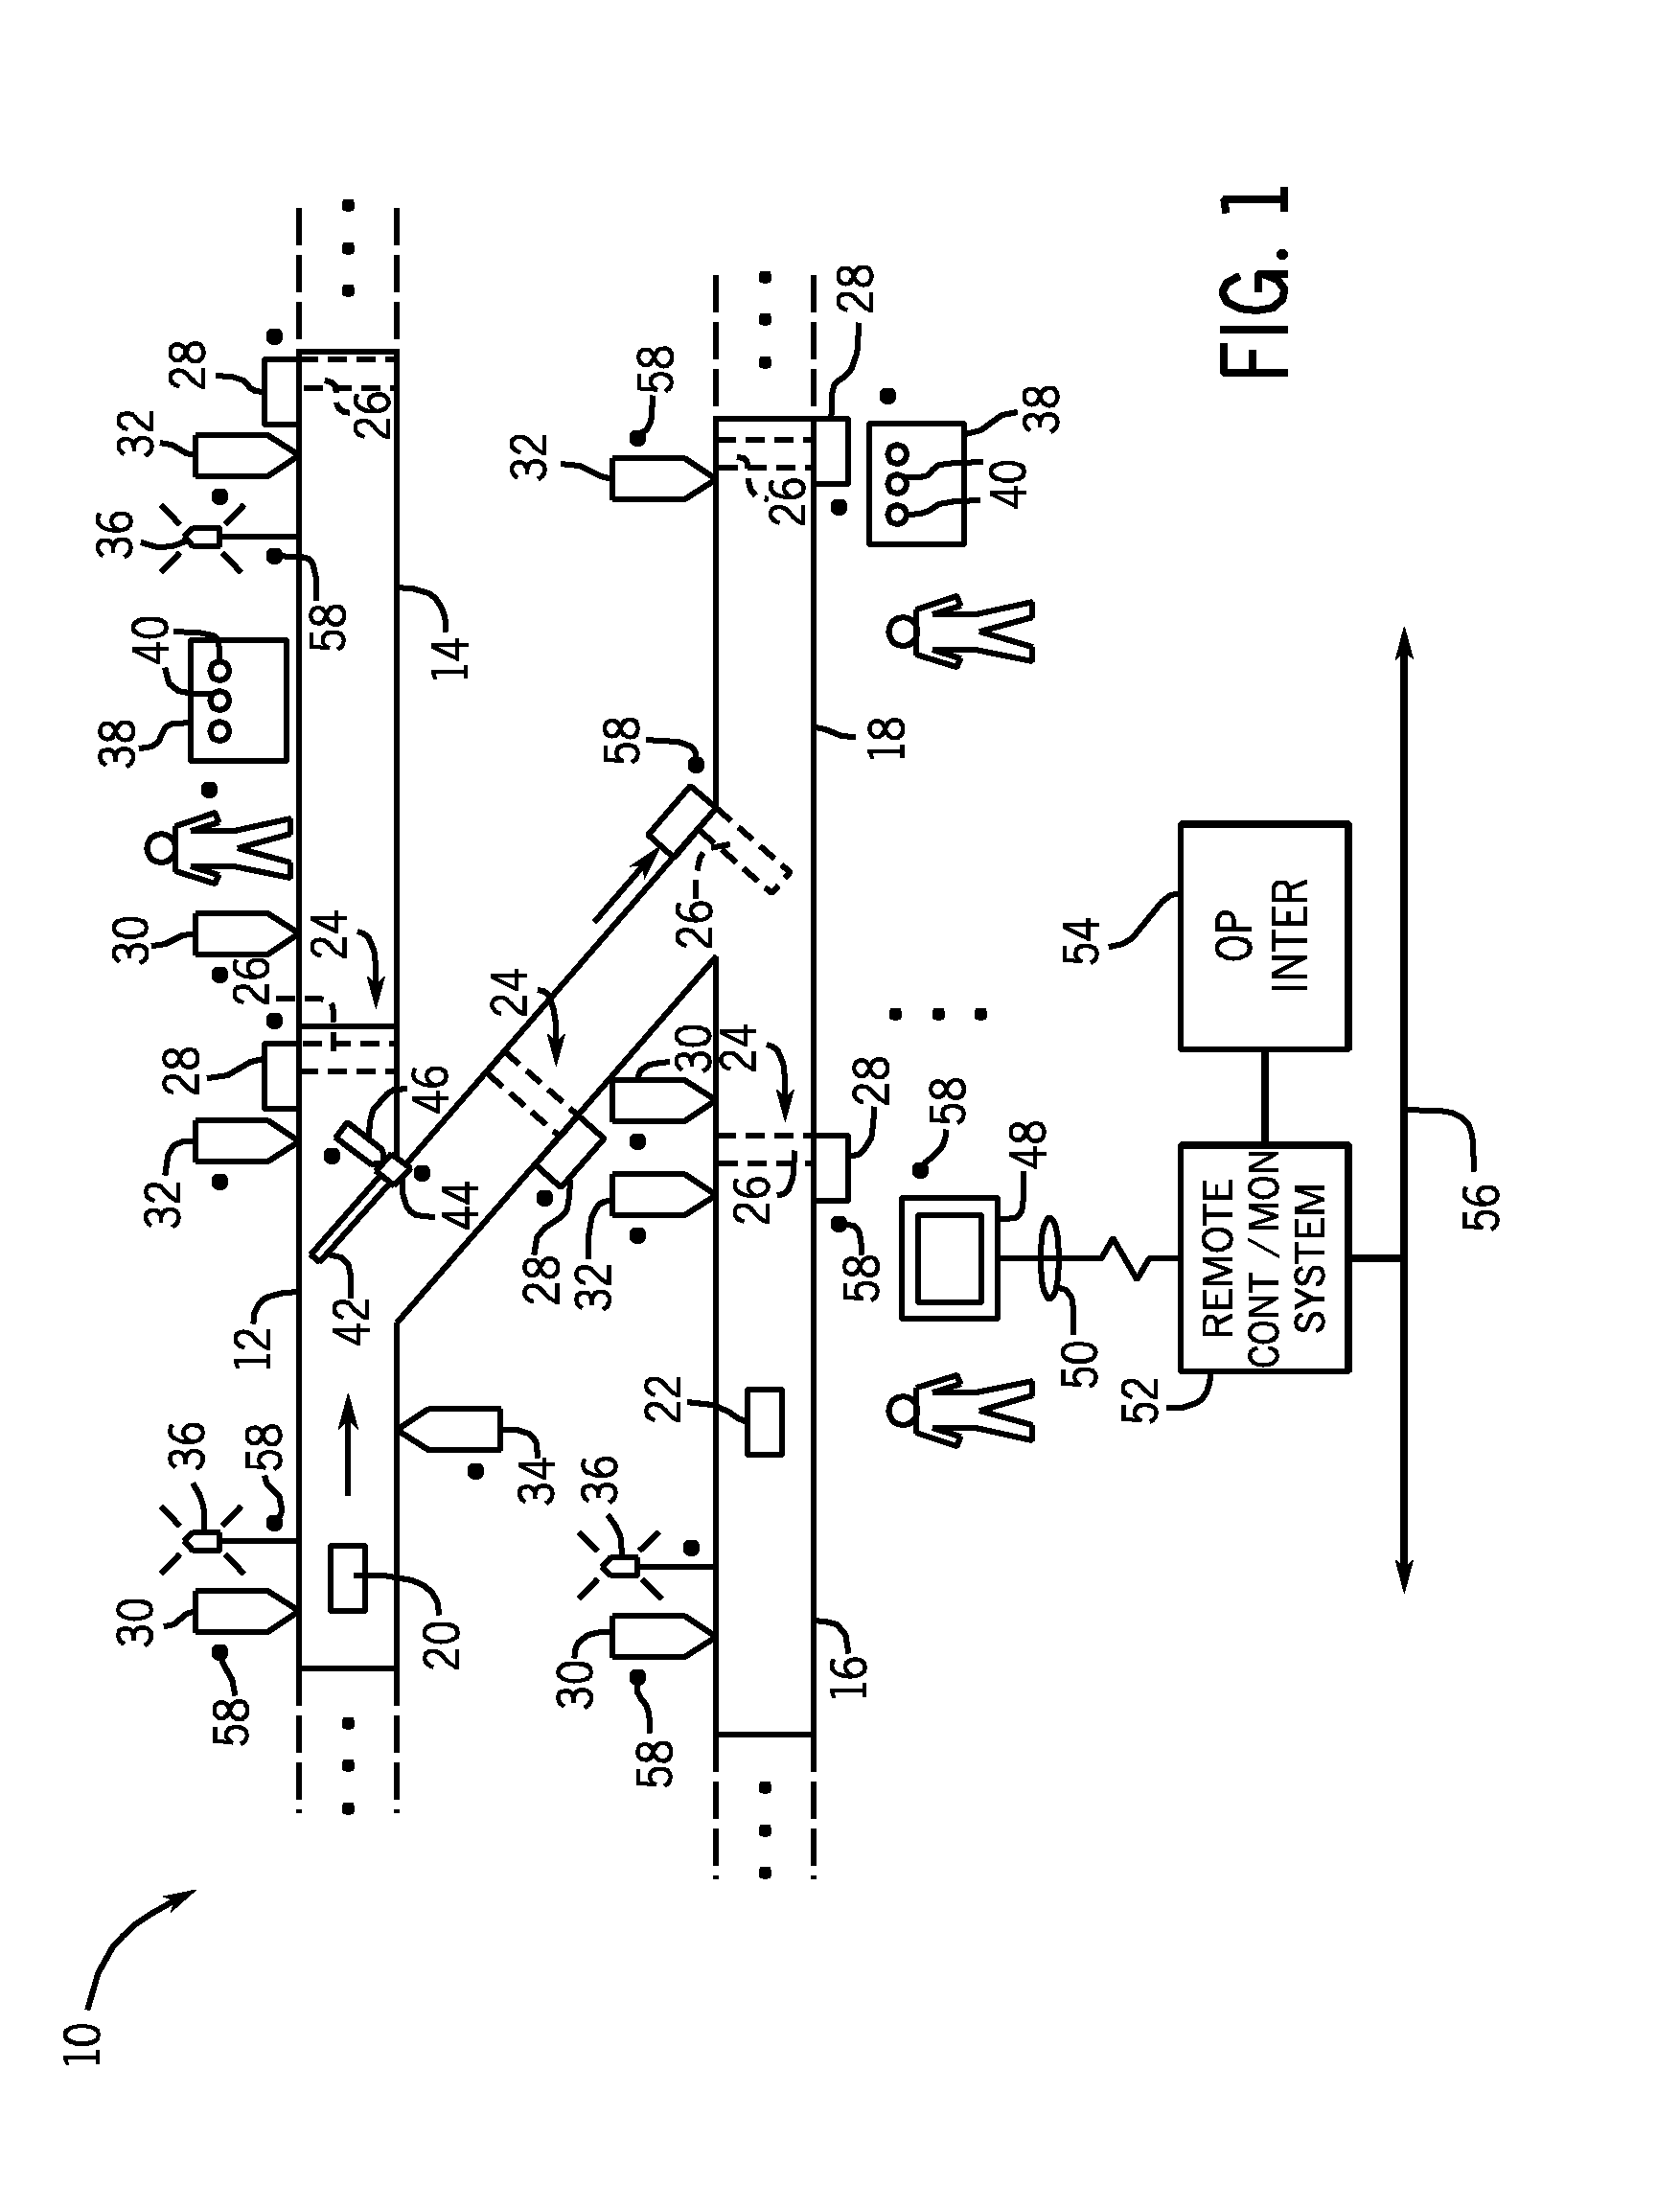 Modular wireless conveyor interconnection method and system